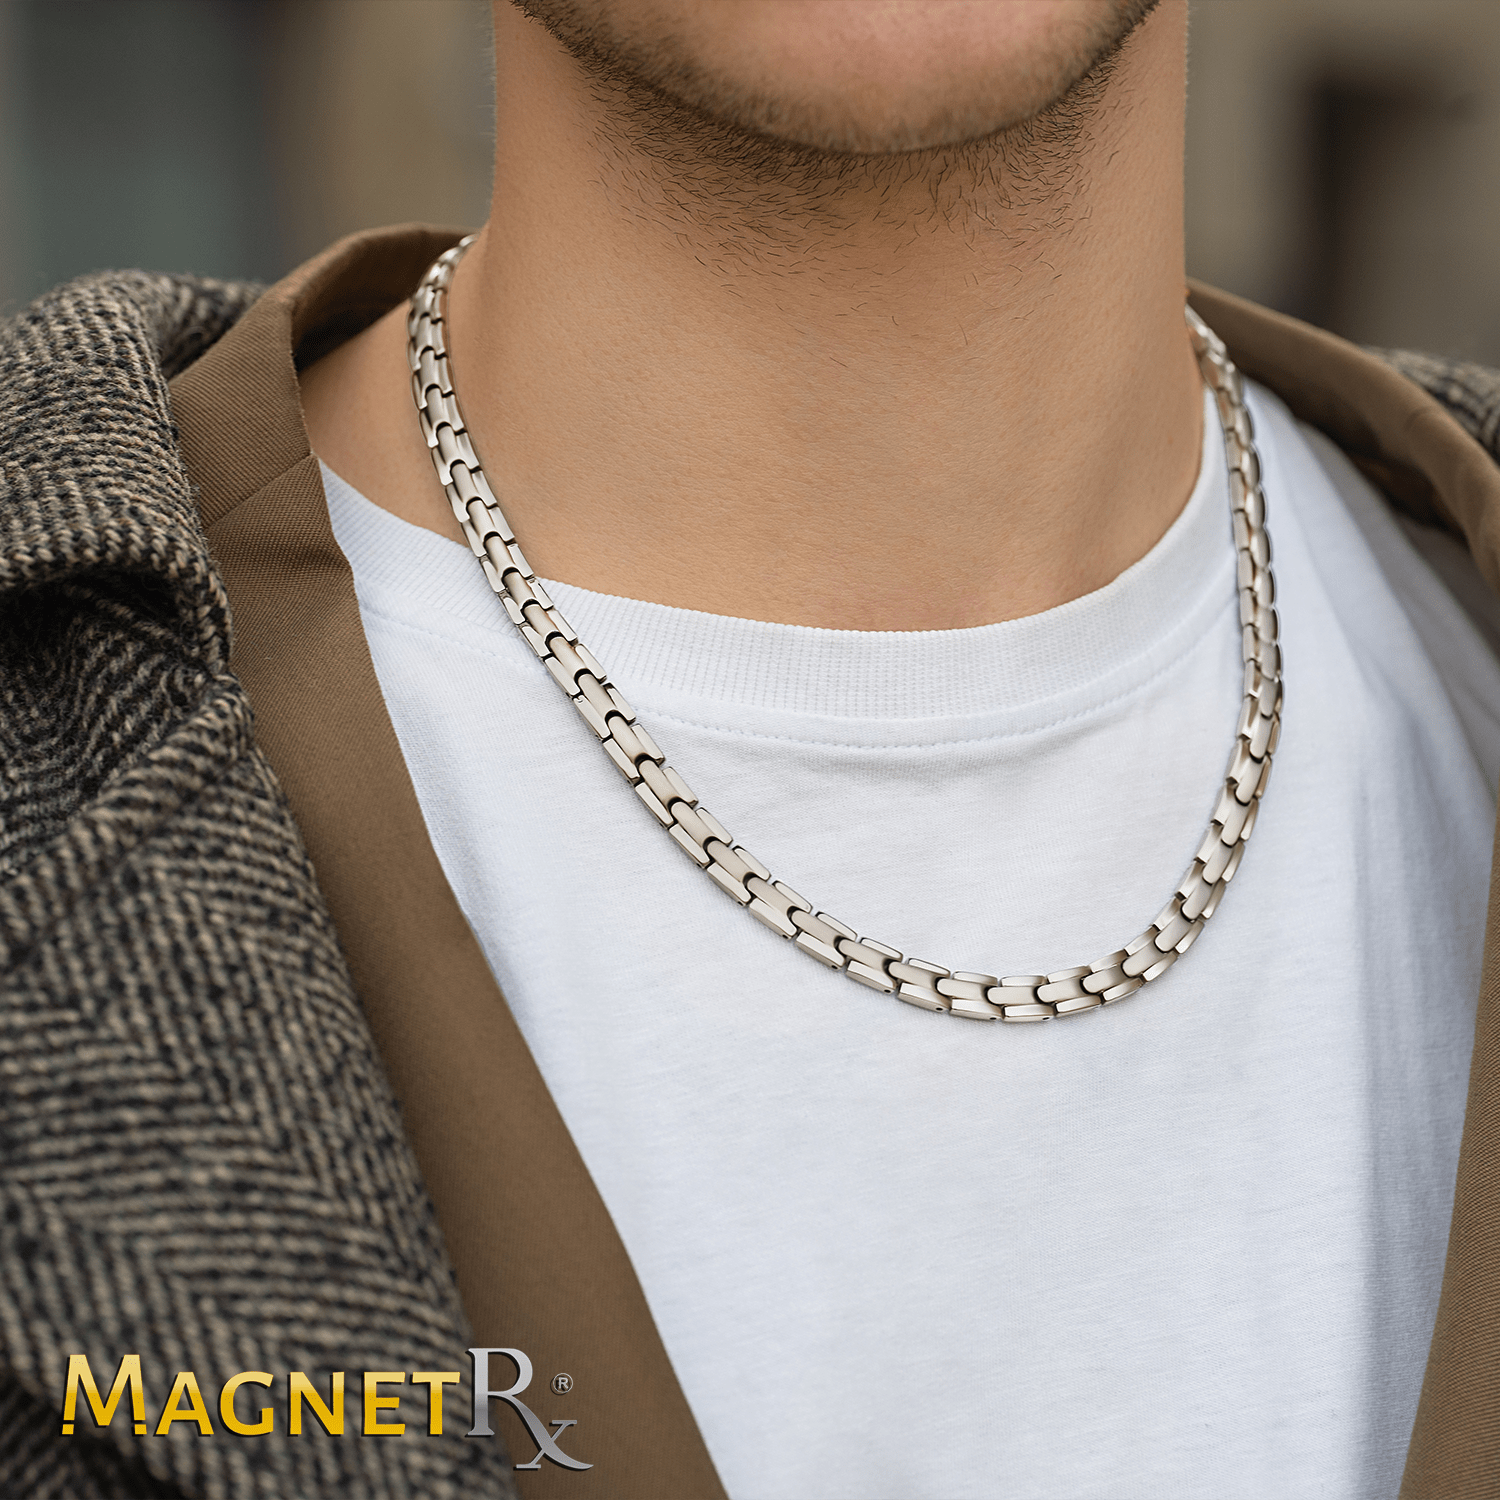 MagnetRX Ultra Strength Magnetic Necklace for Men - Silver Titanium